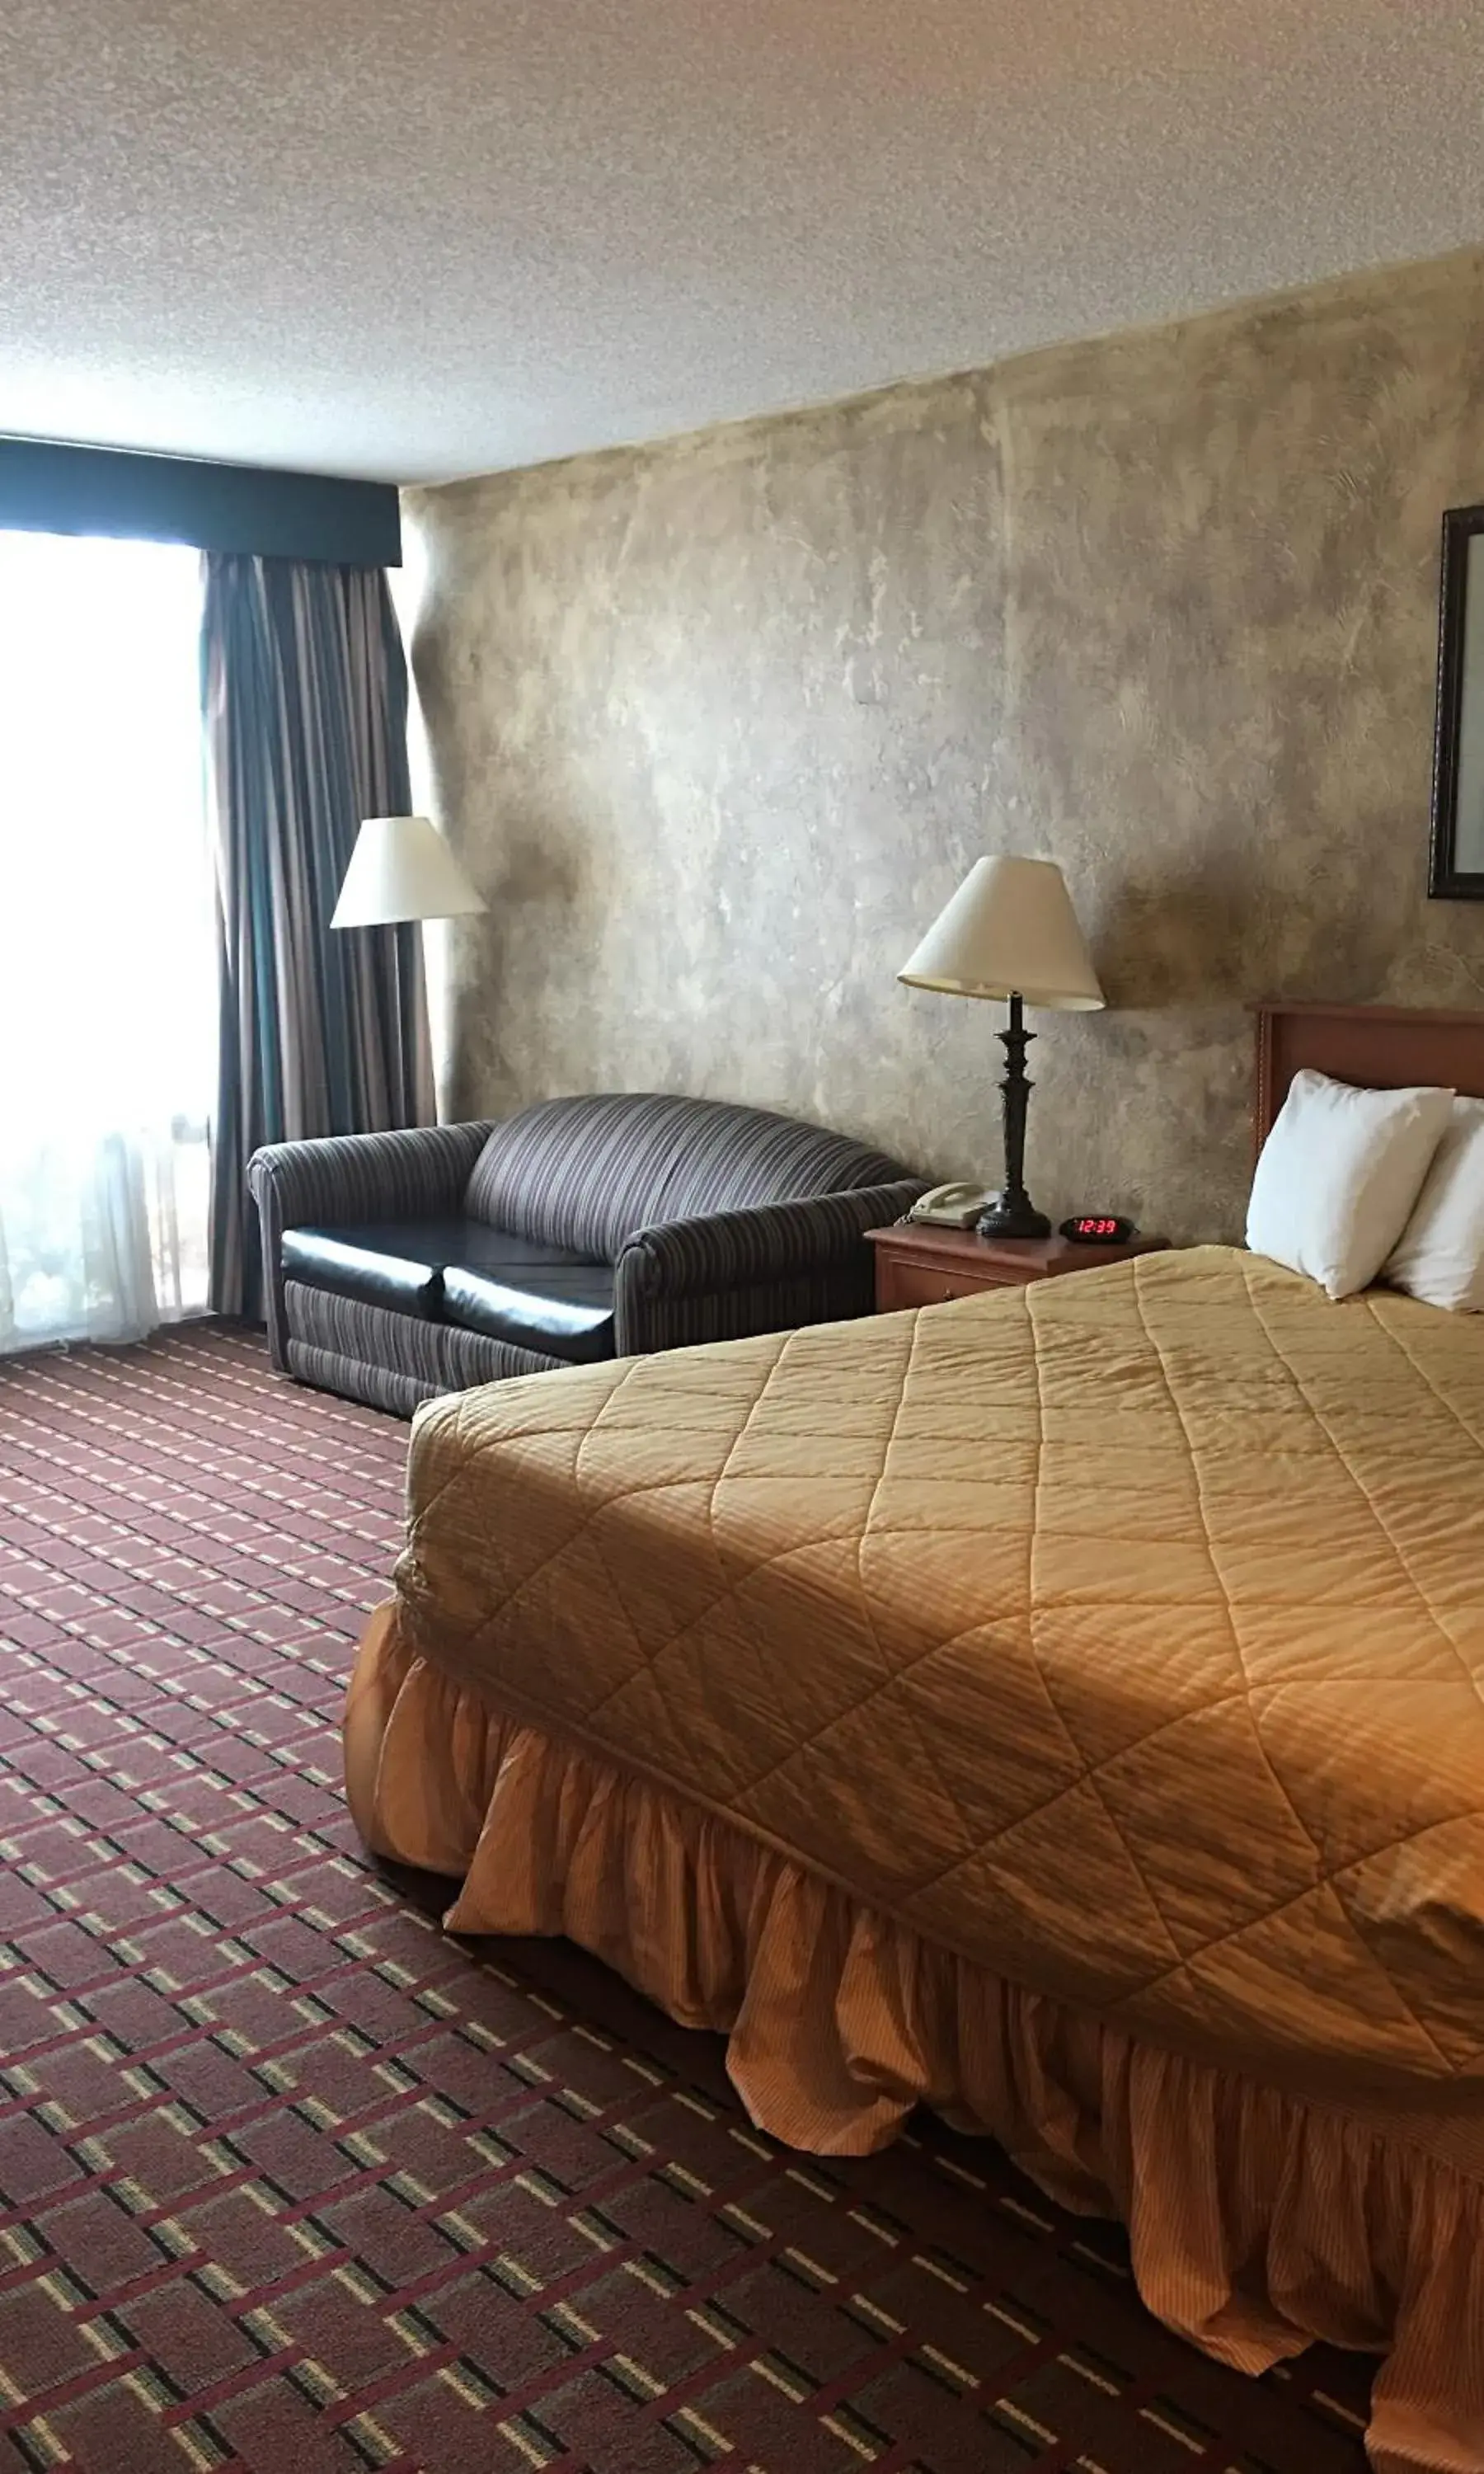 Bed, Room Photo in Biltmore Hotel Oklahoma